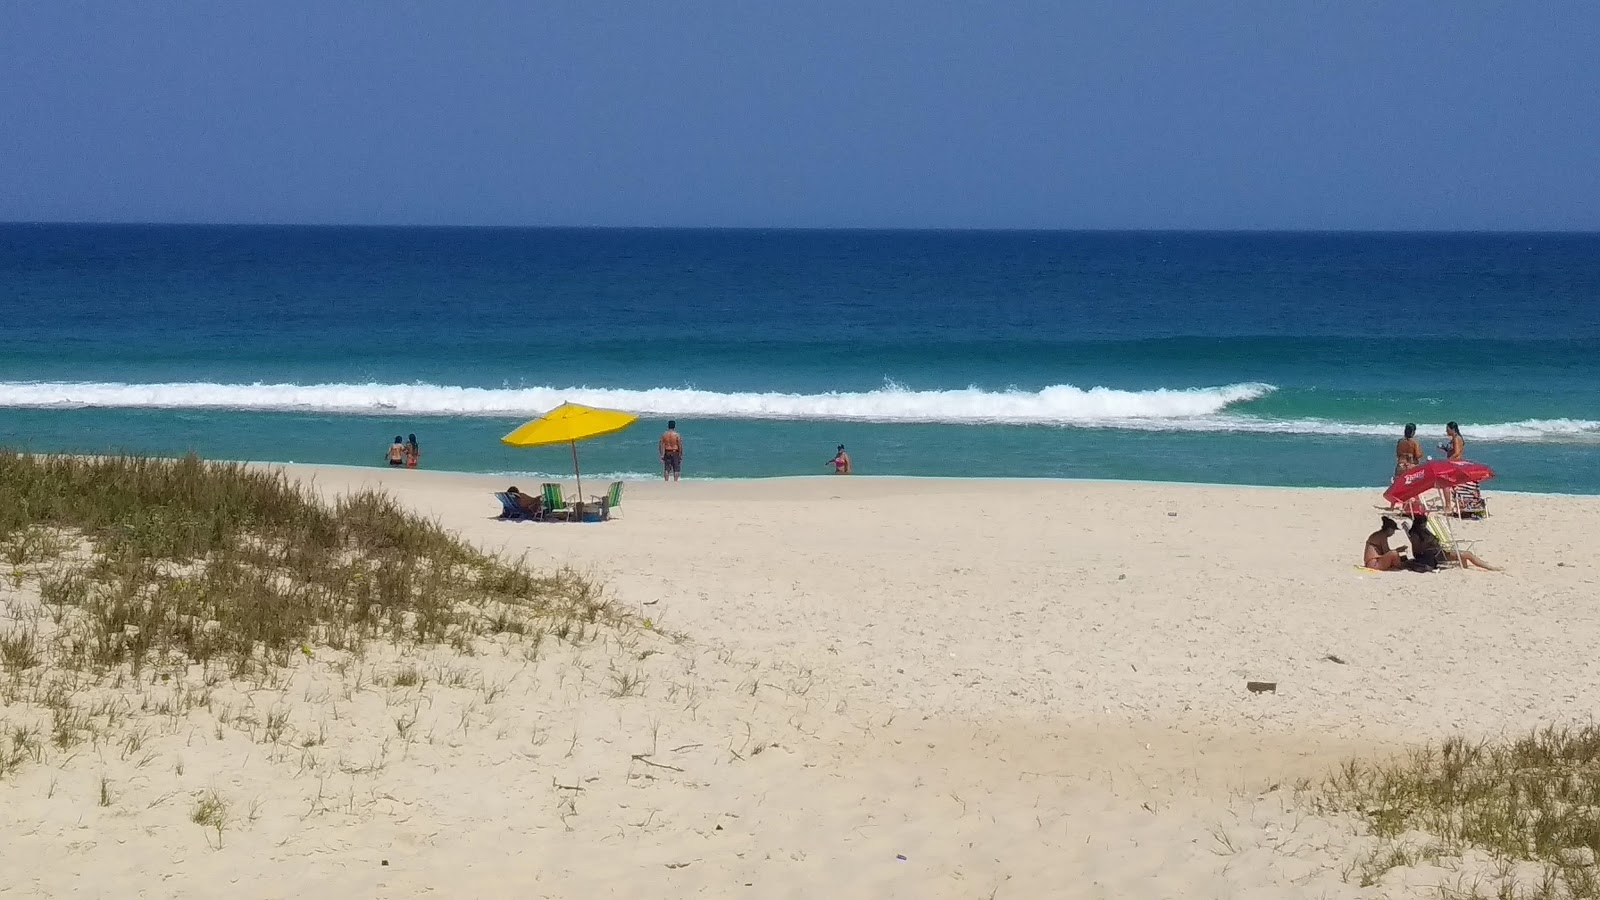 Fotografie cu Praia do Dentinho cu o suprafață de nisip fin alb